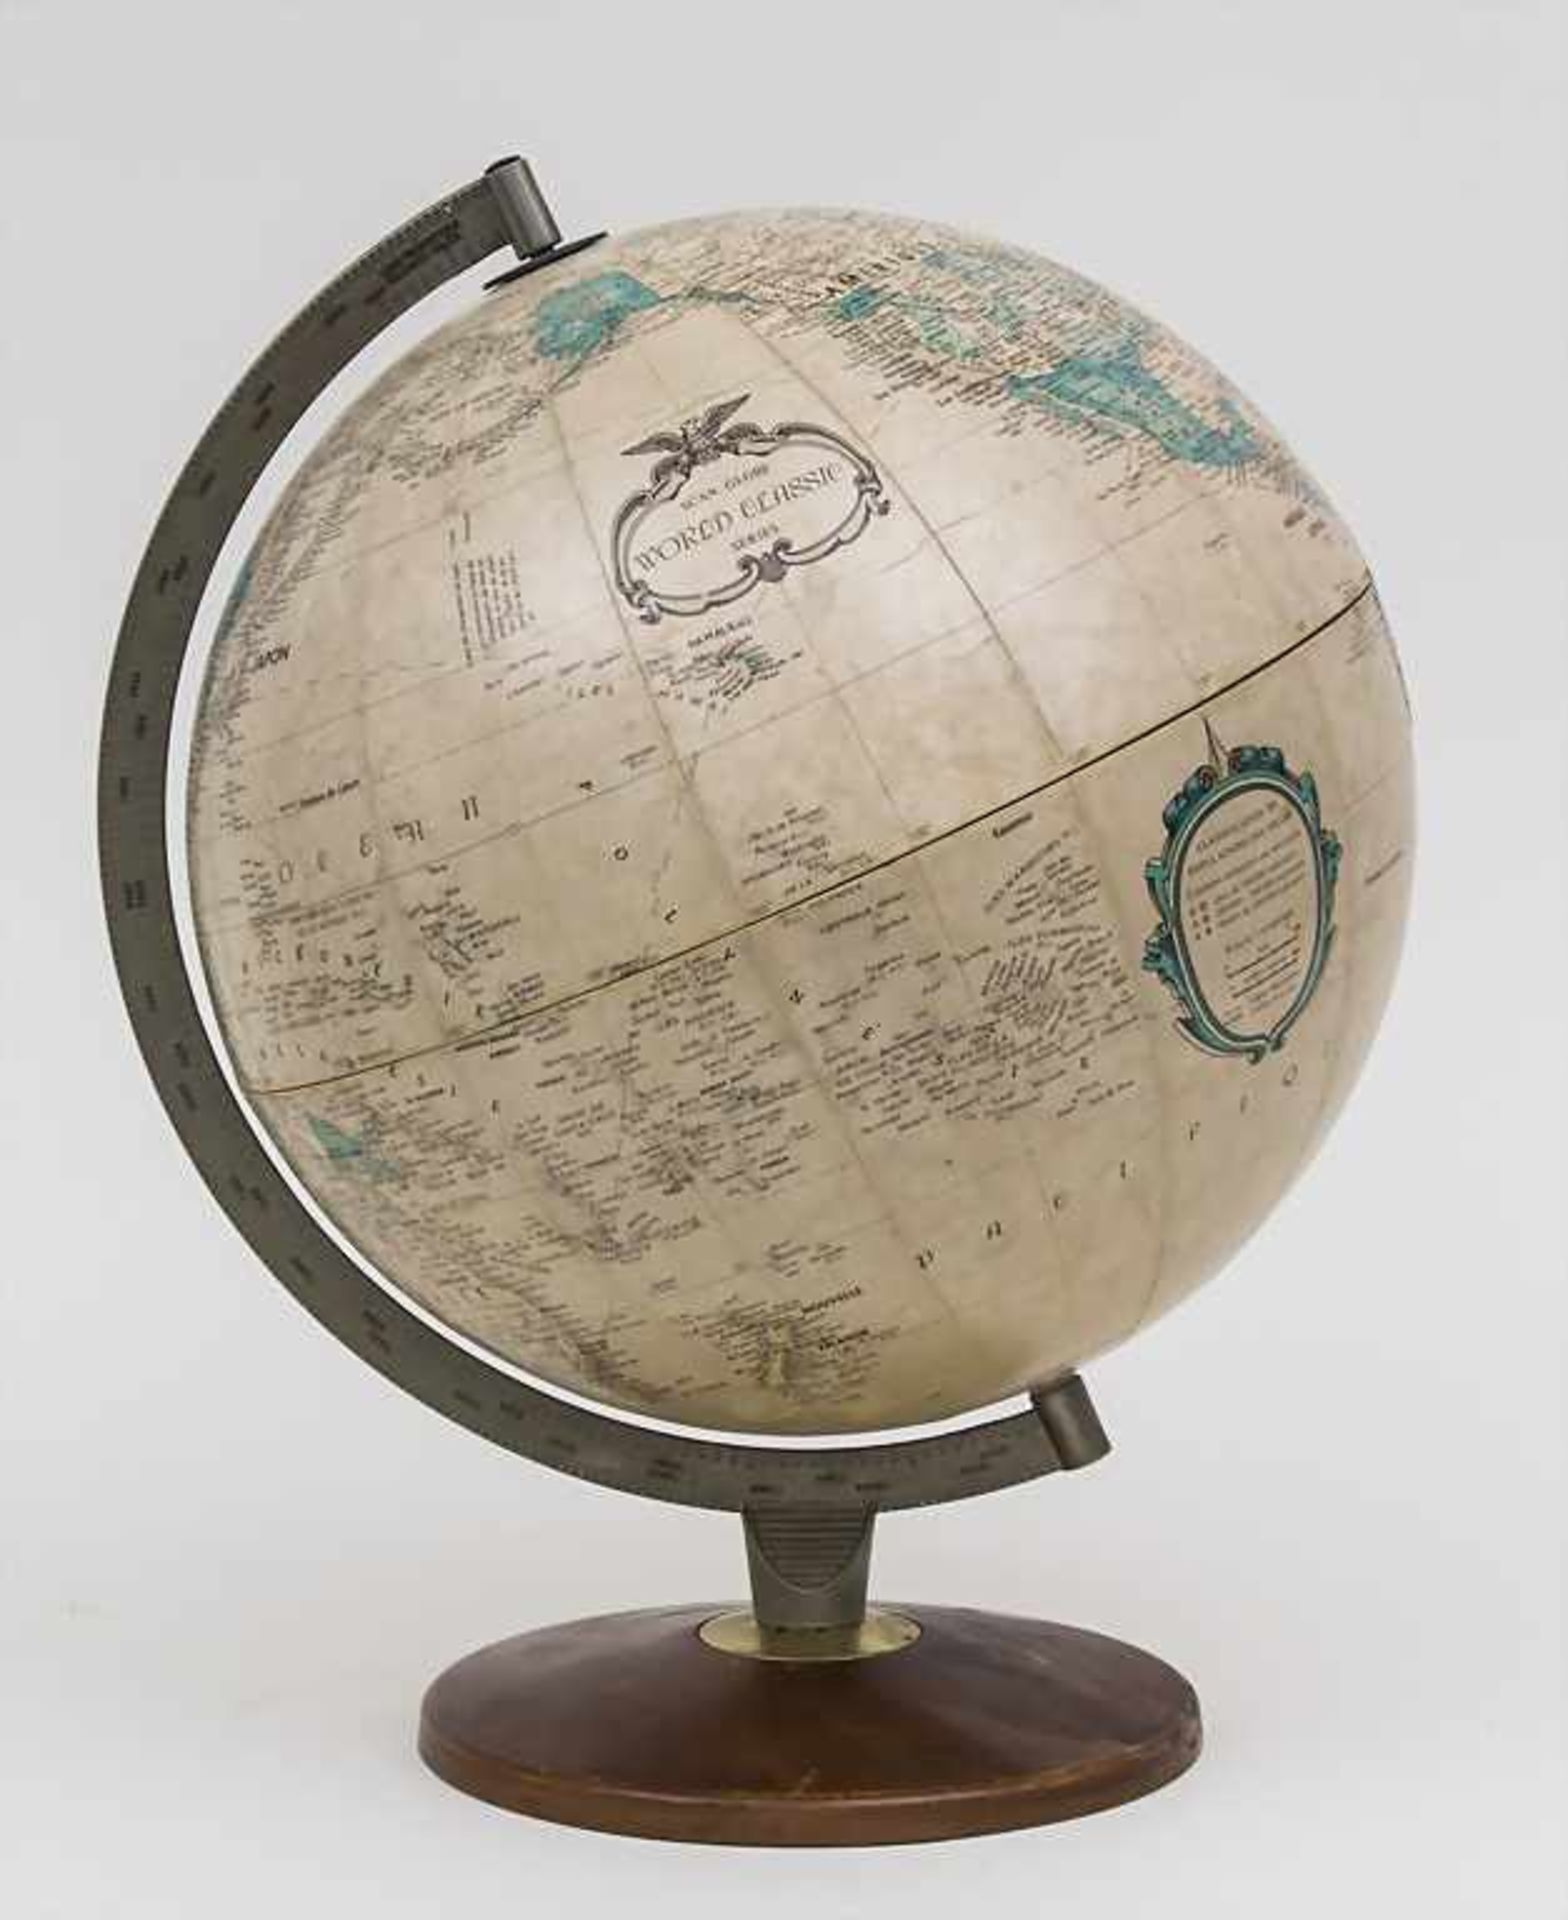 Tisch-Globus / A Scan-Globe 'World Classic' Series, Replogle Globes Inc., ab 1952Material: